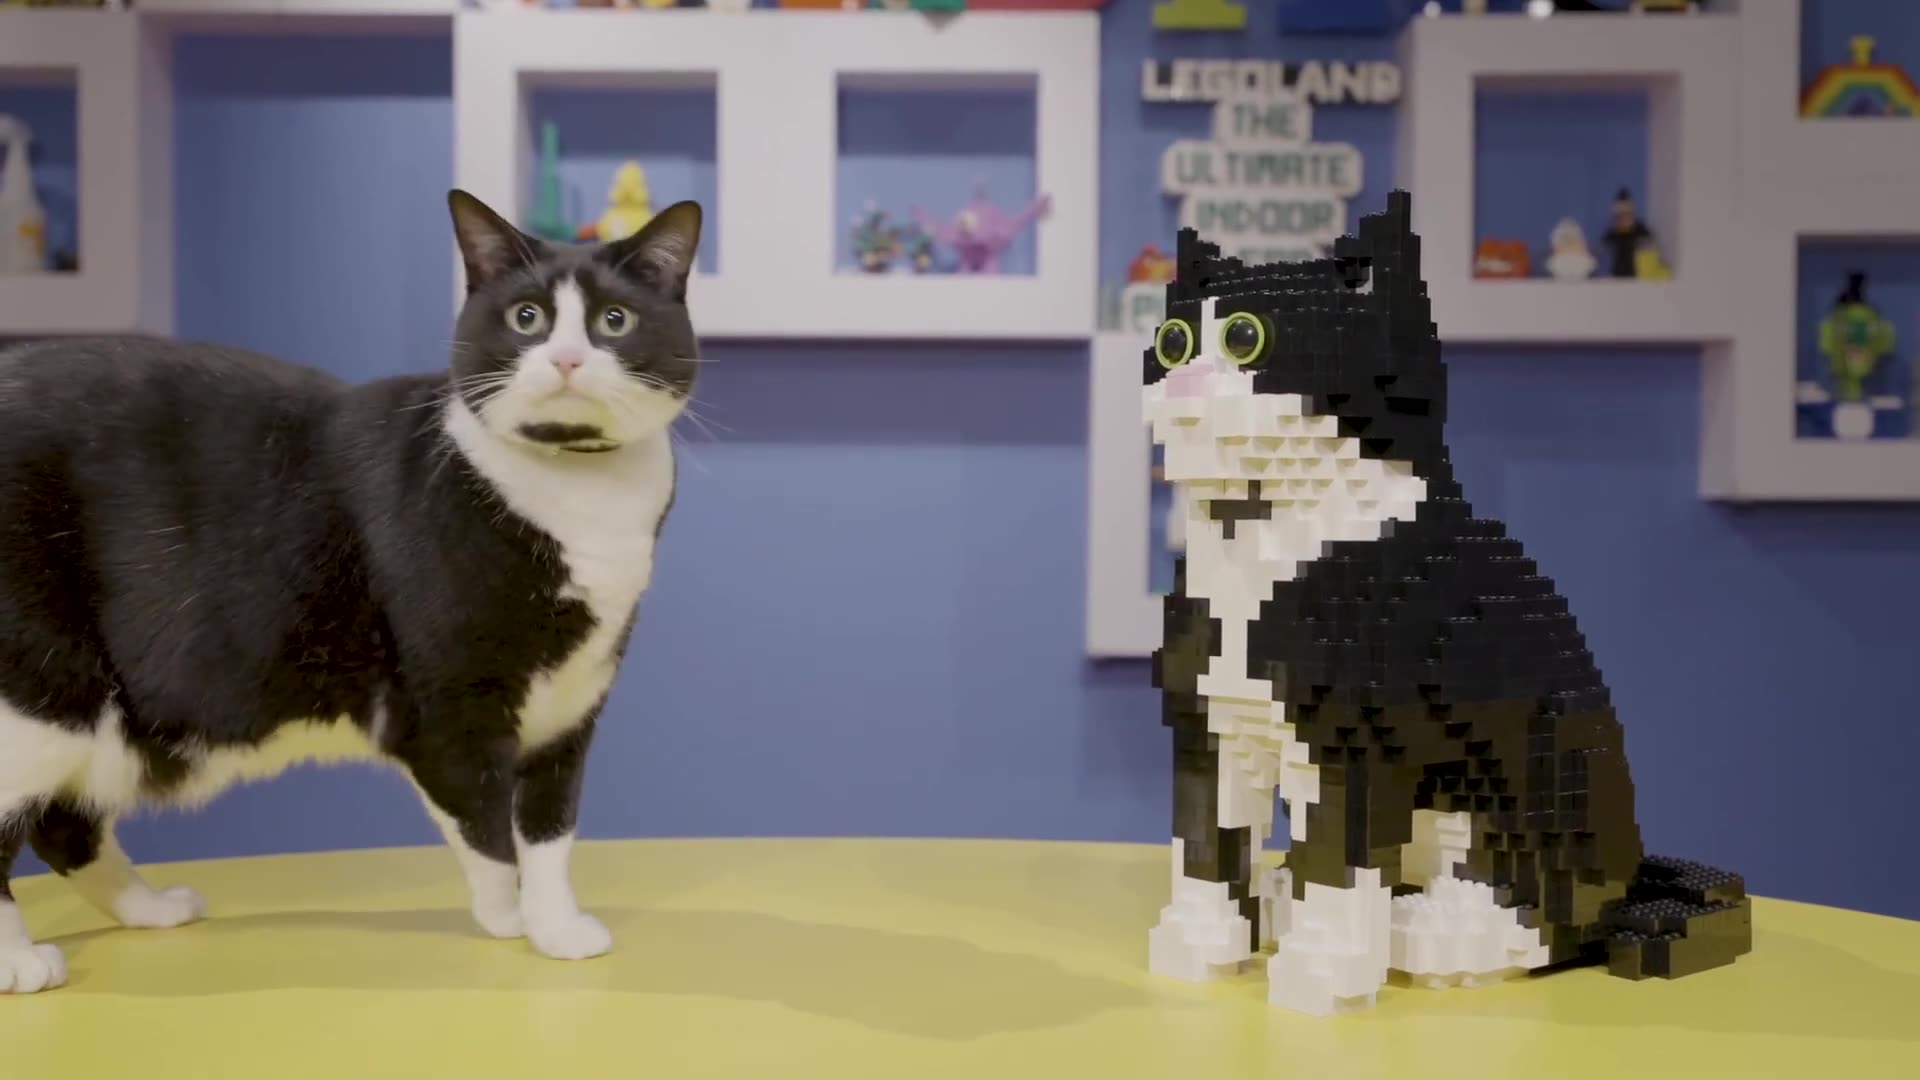 Socks le chat rencontre son sosie Lego - 20 minutes